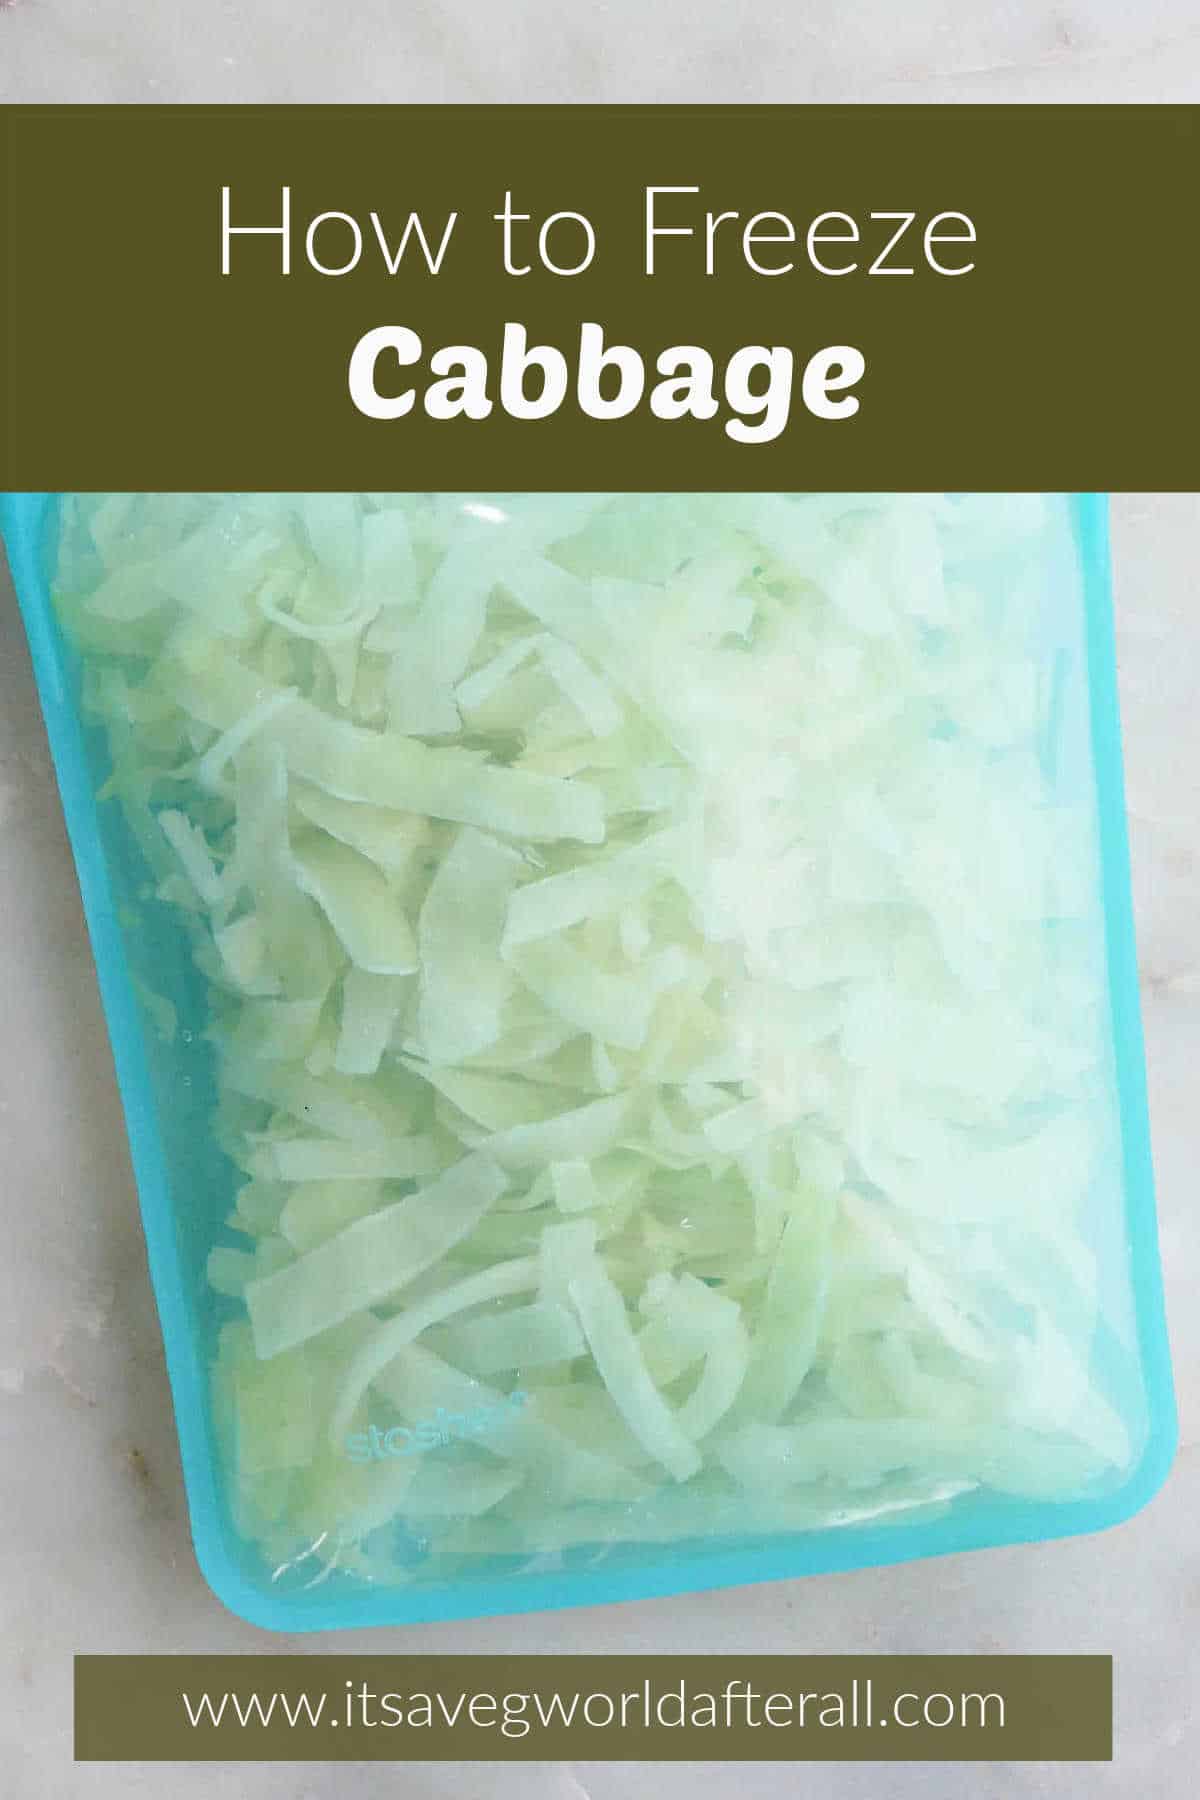 Cabbage, Green, Shredded